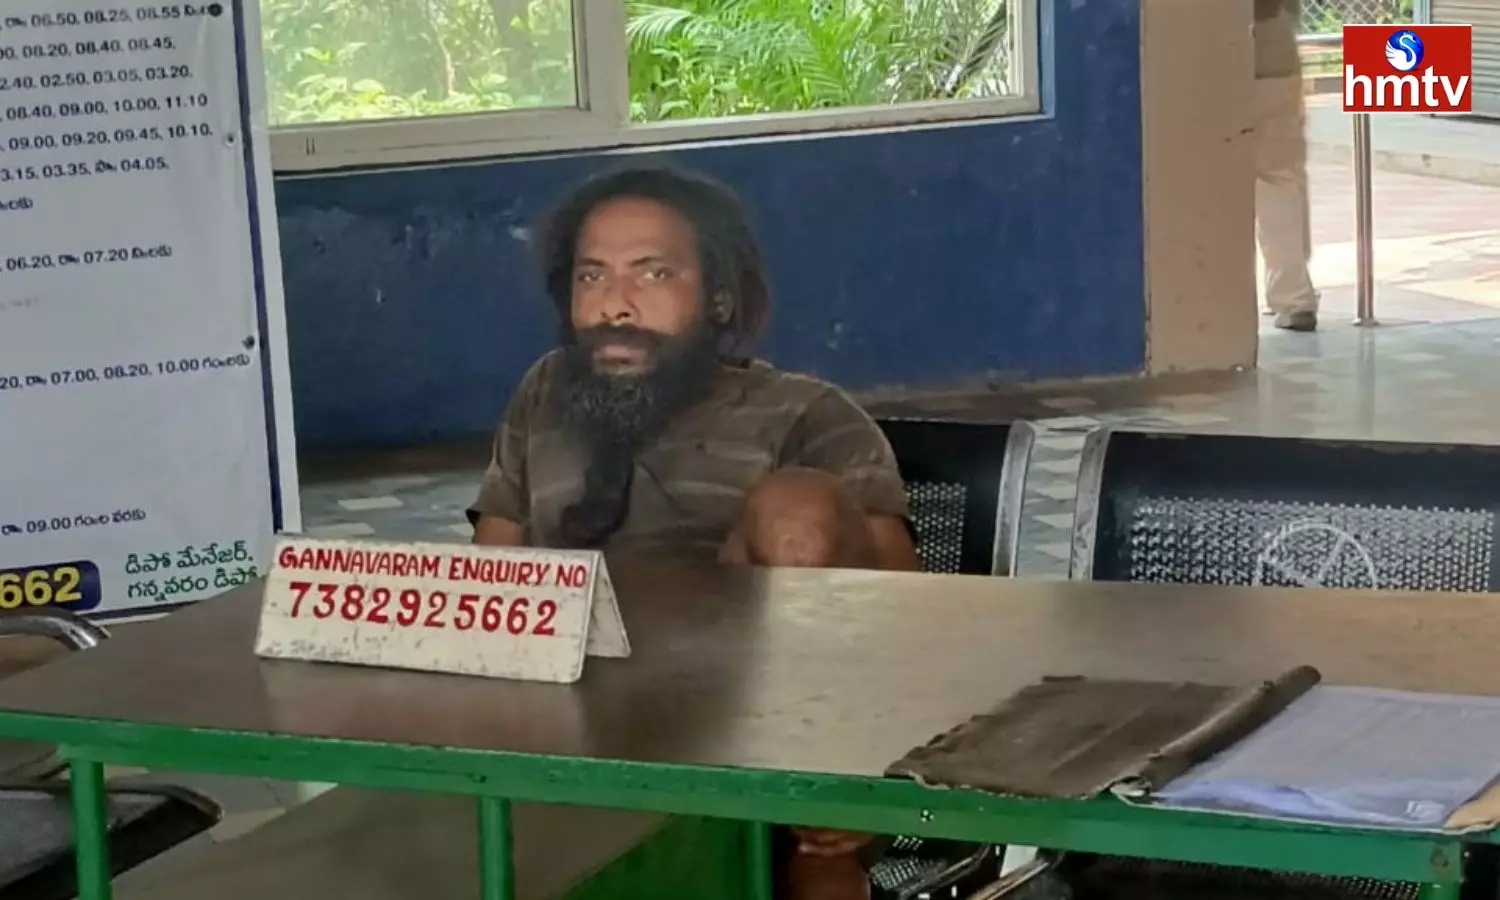 A Beggar Broke Into The Control Room In Gannavaram